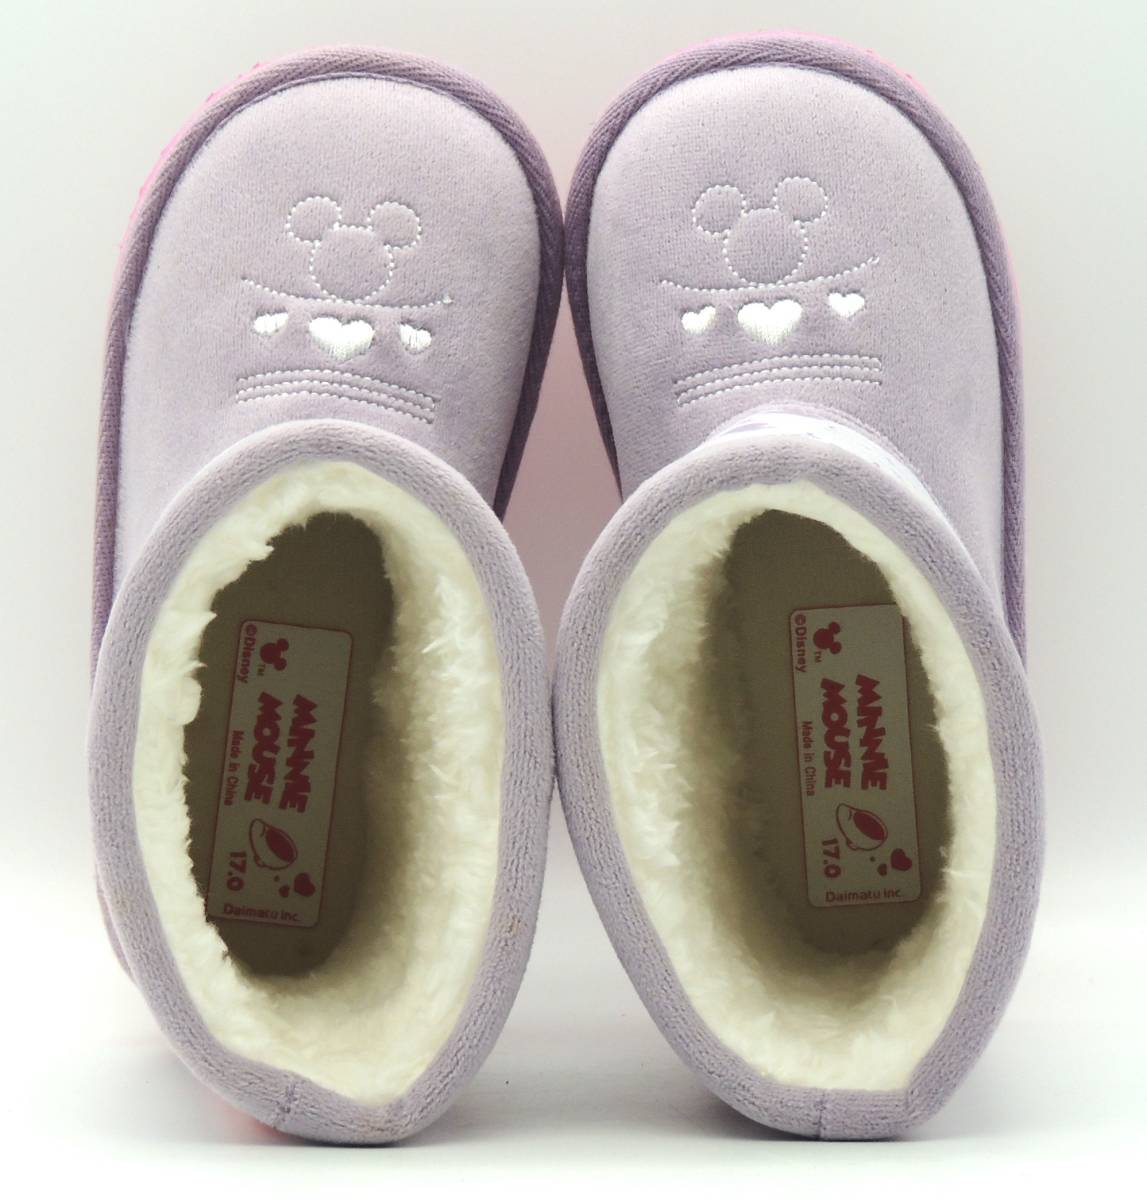 Disney Mickey Mouse мутон ботинки ребенок девочка Kids. . вода обработка Disney DS7230 лиловый 17.0cm